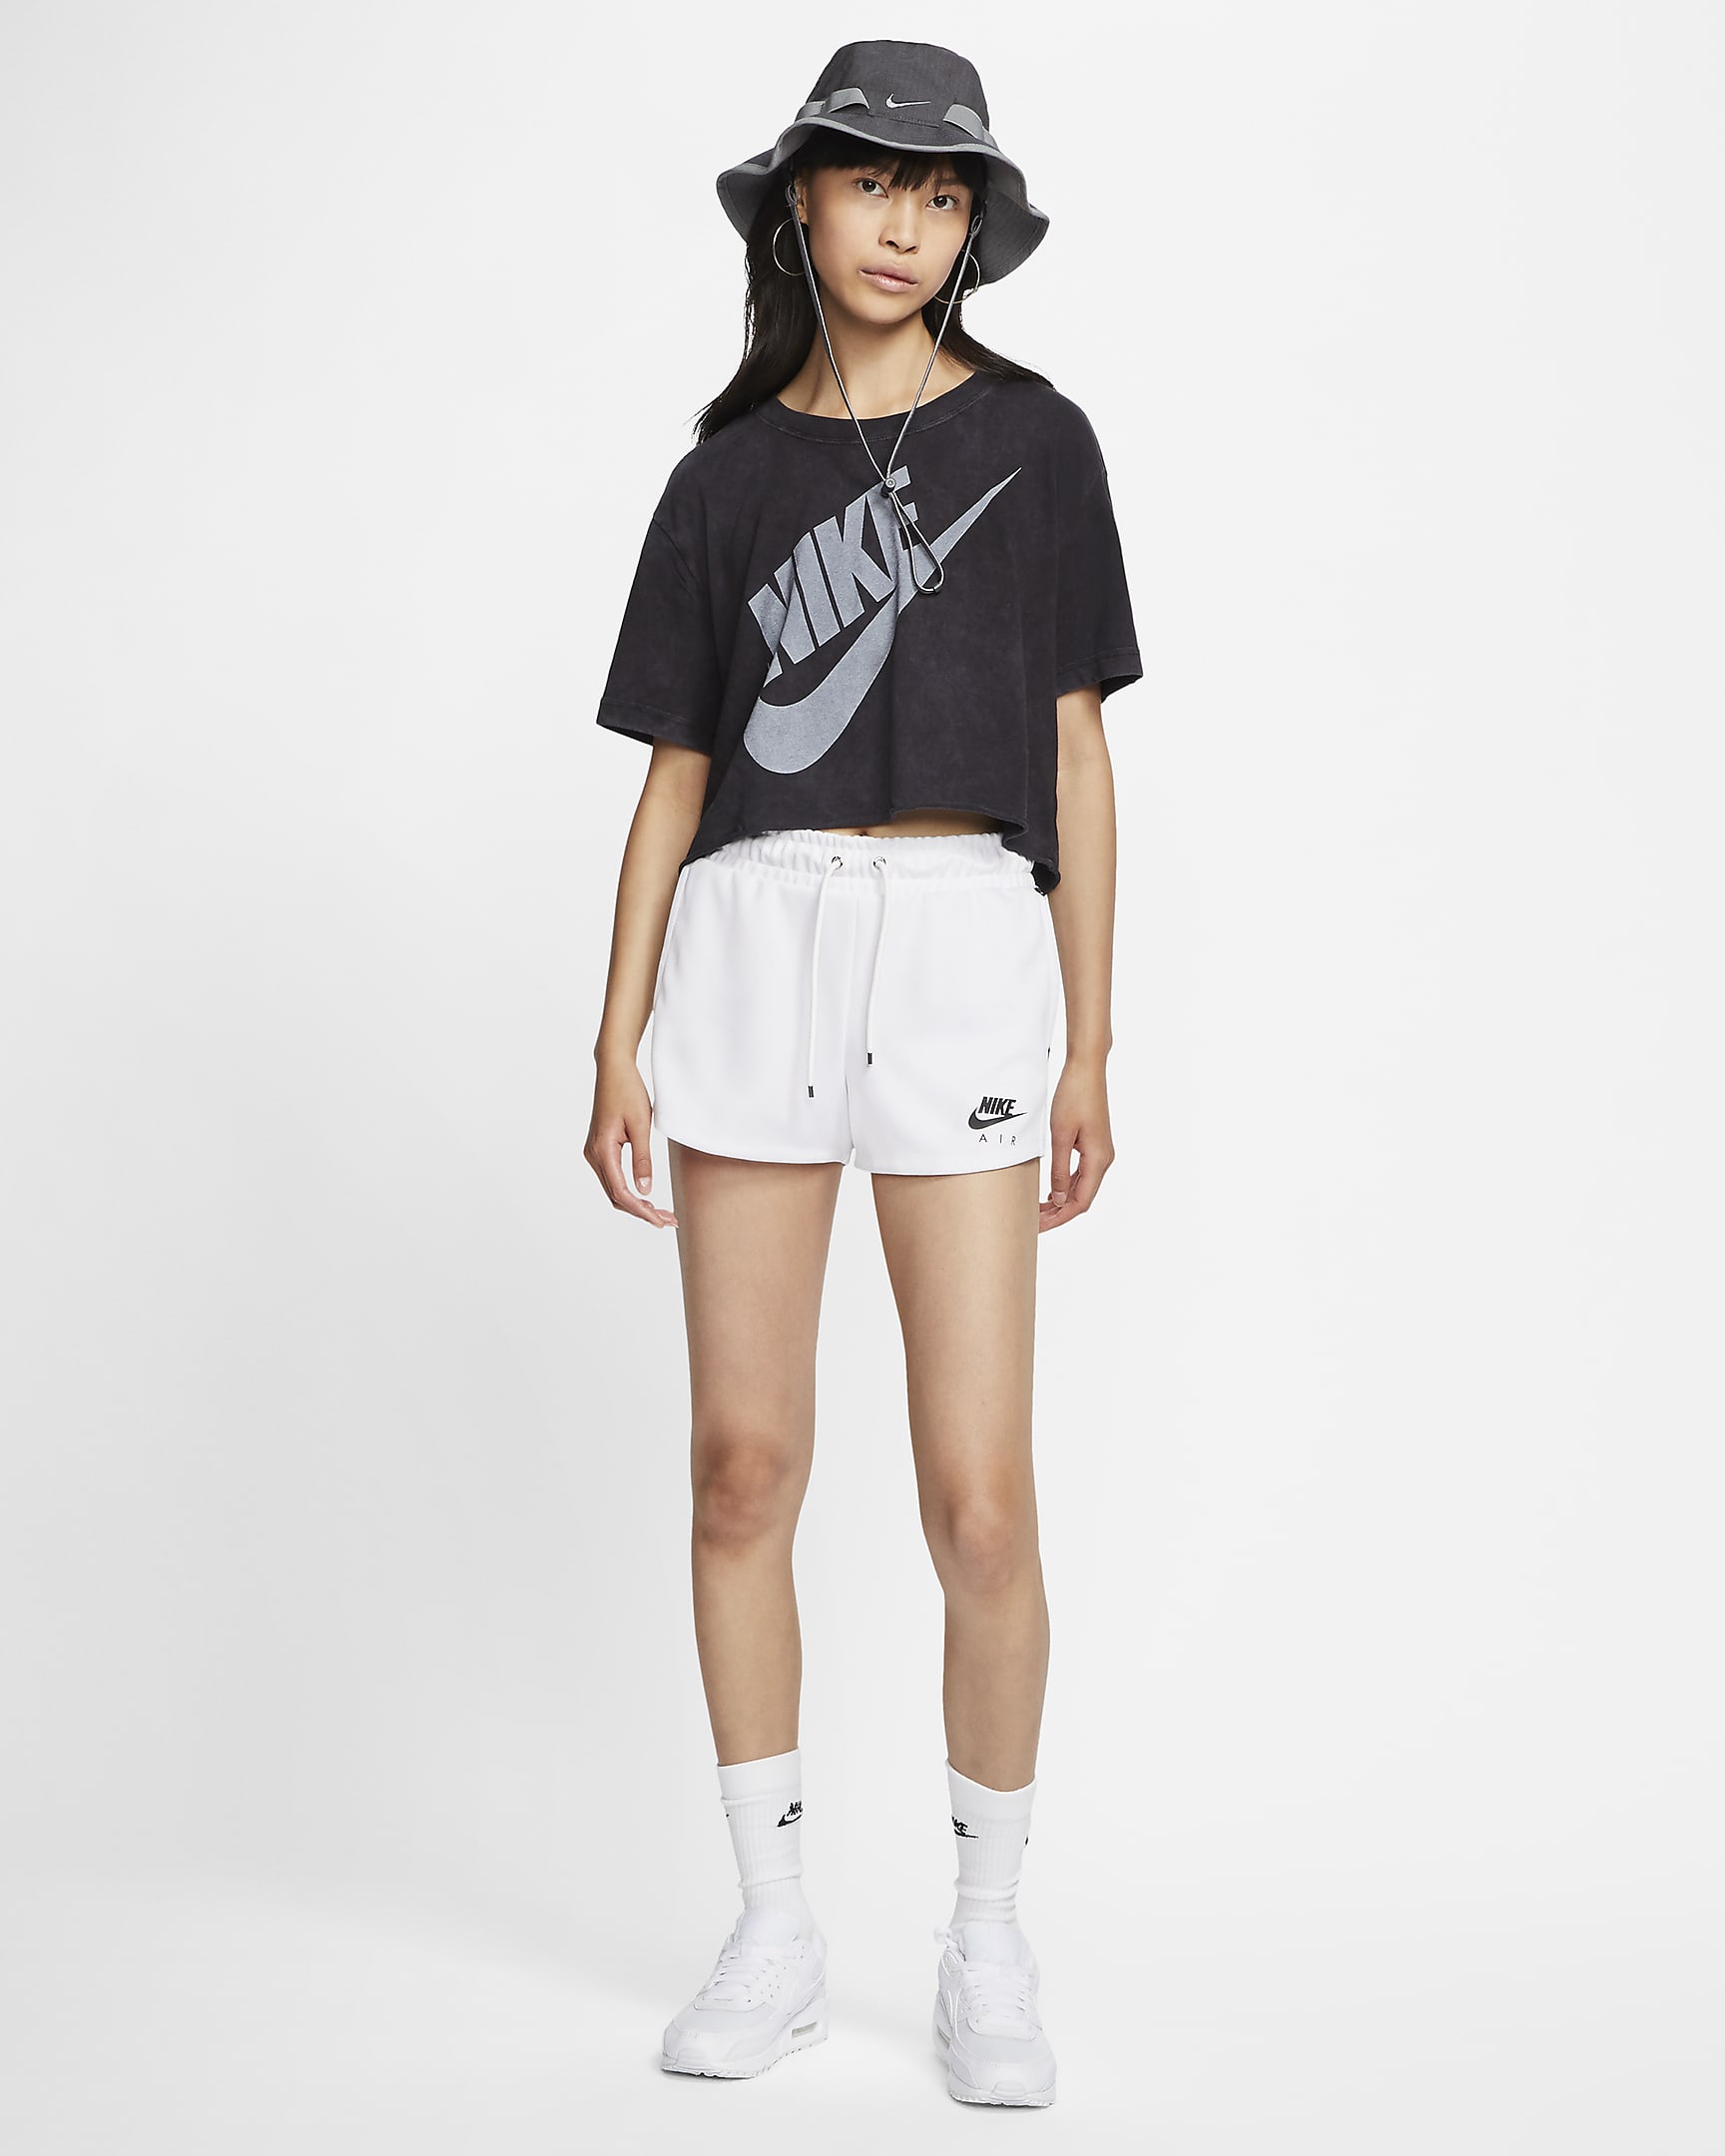 Nike Air Women's Shorts. Nike ID